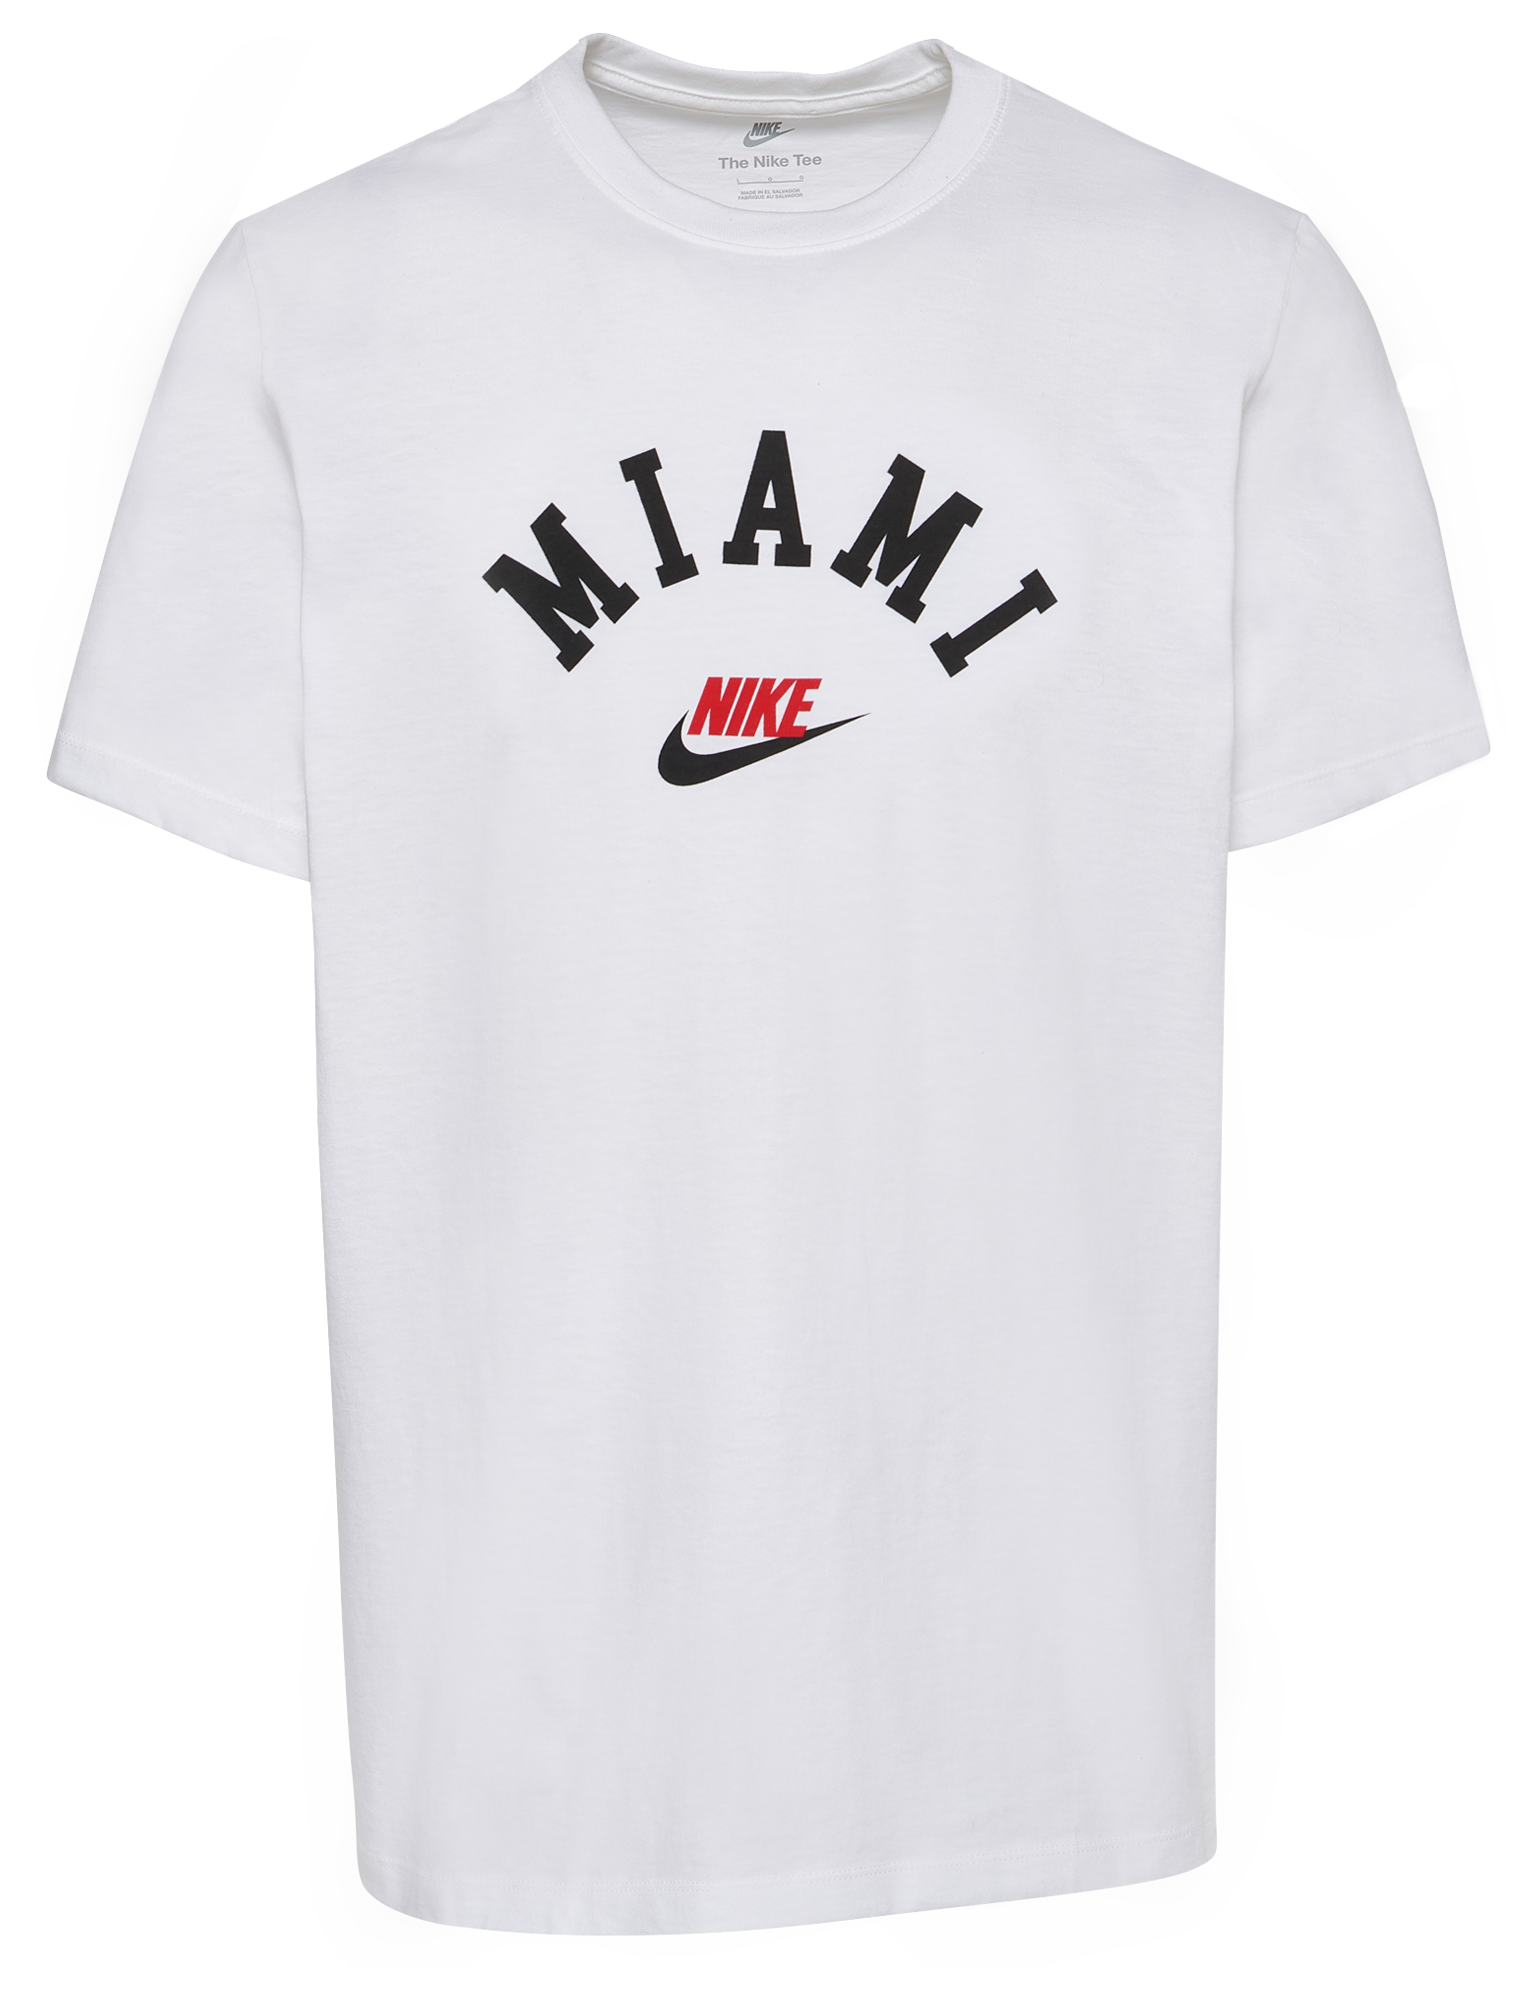 Nike Miami Arch | Champs Sports